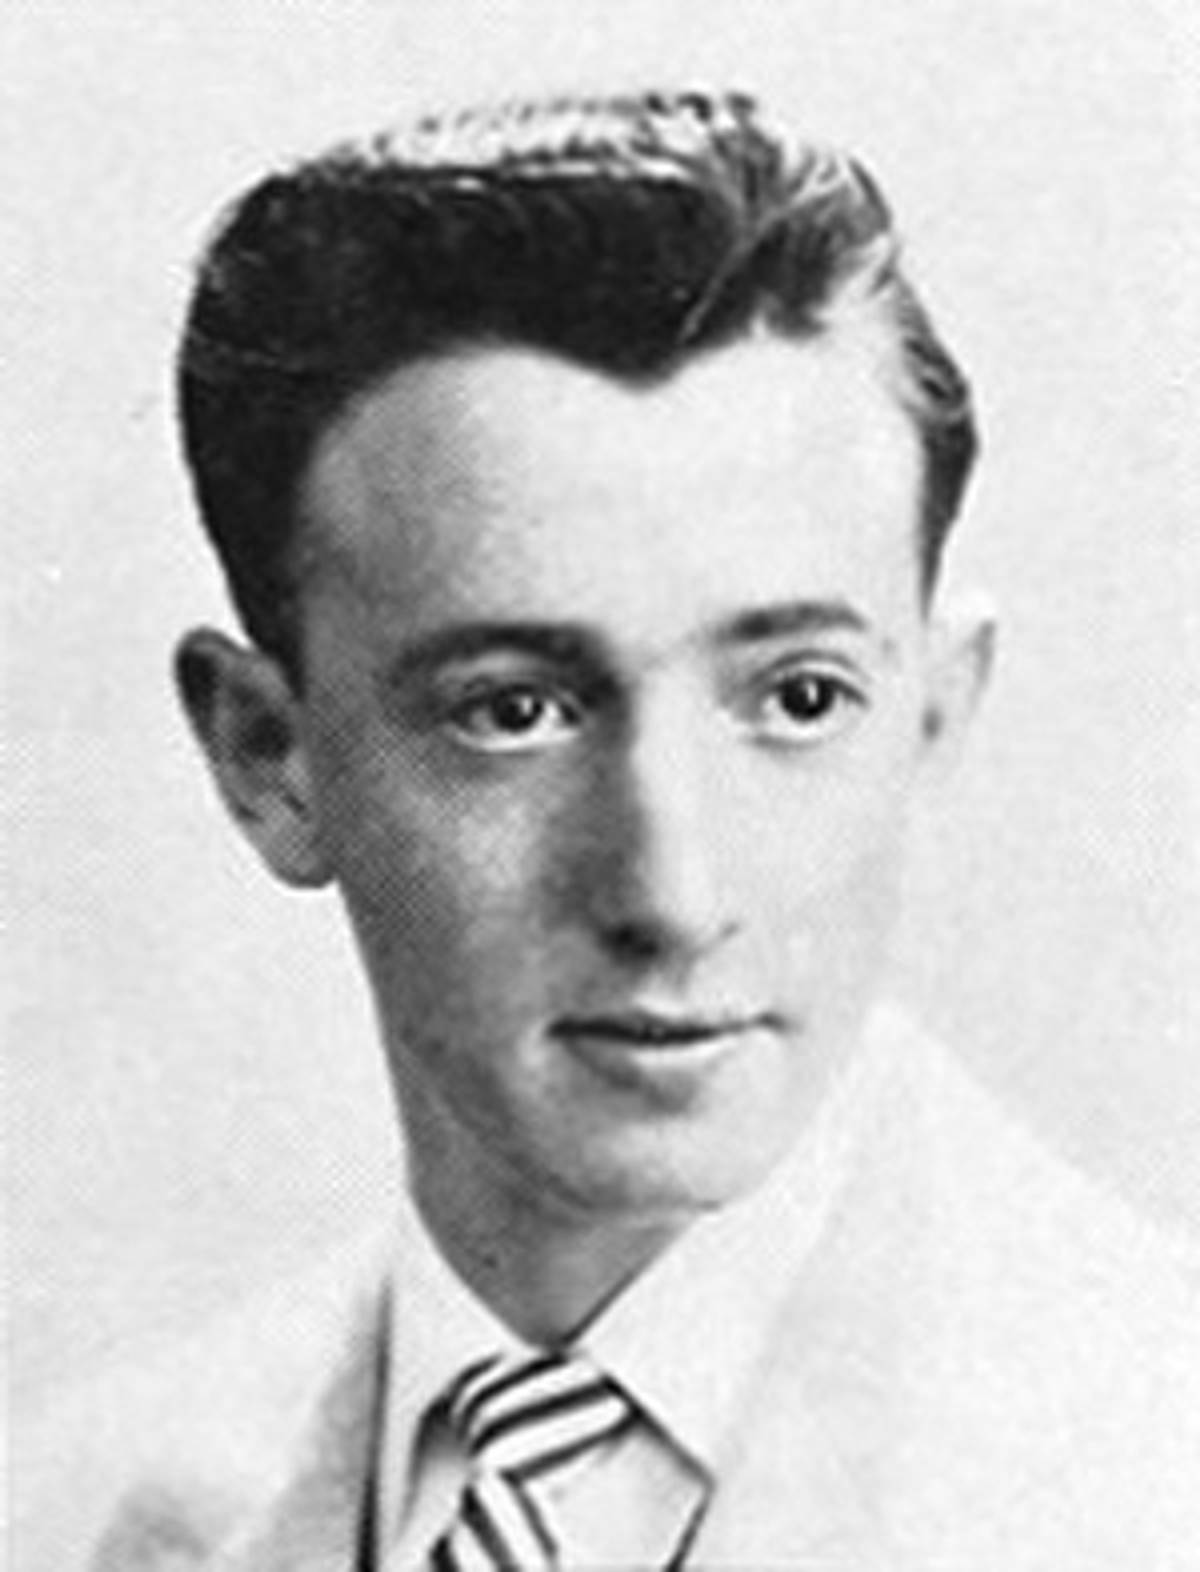 Allen as a high school senior, 1953 (Wikipedia)